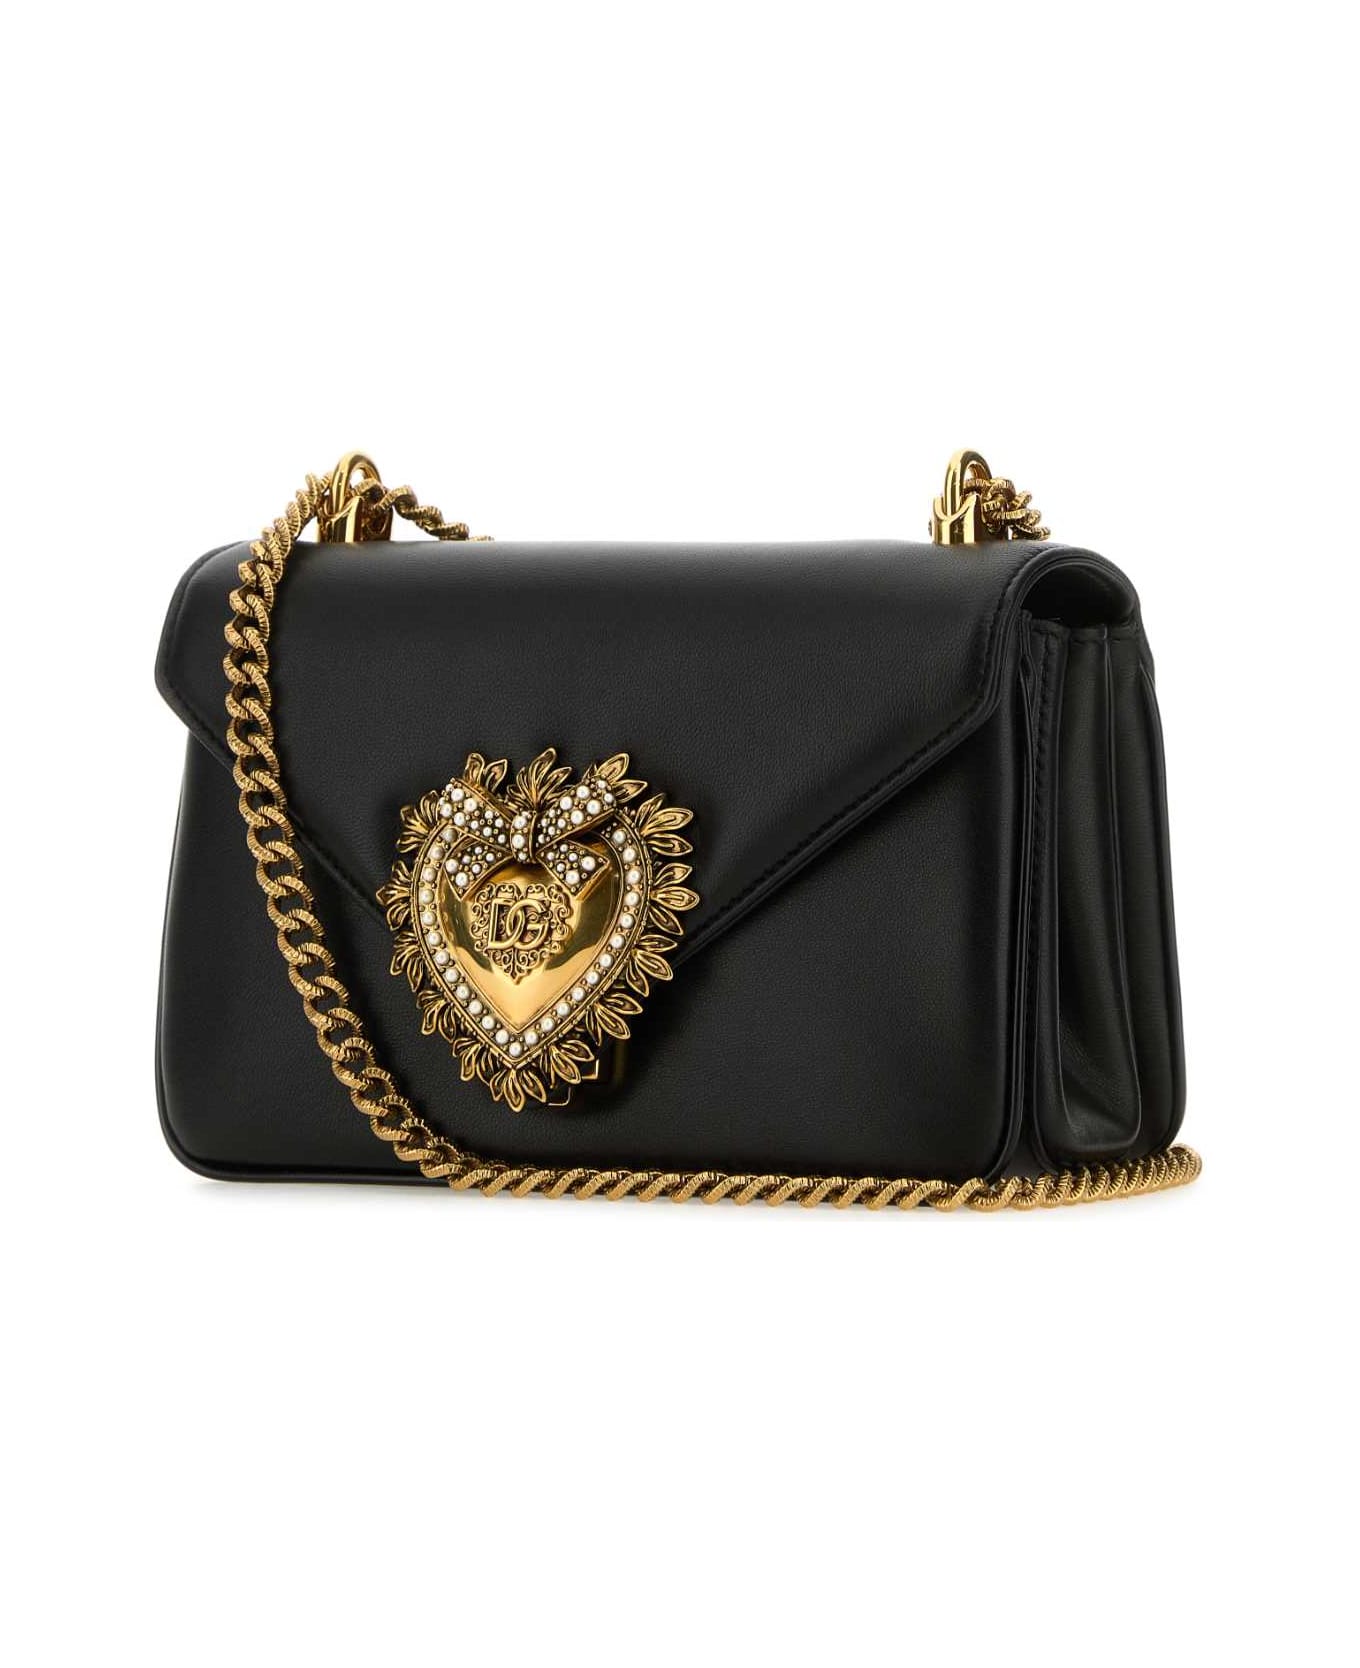 Dolce & Gabbana Black Nappa Leather Devotion Shoulder Bag - NERO